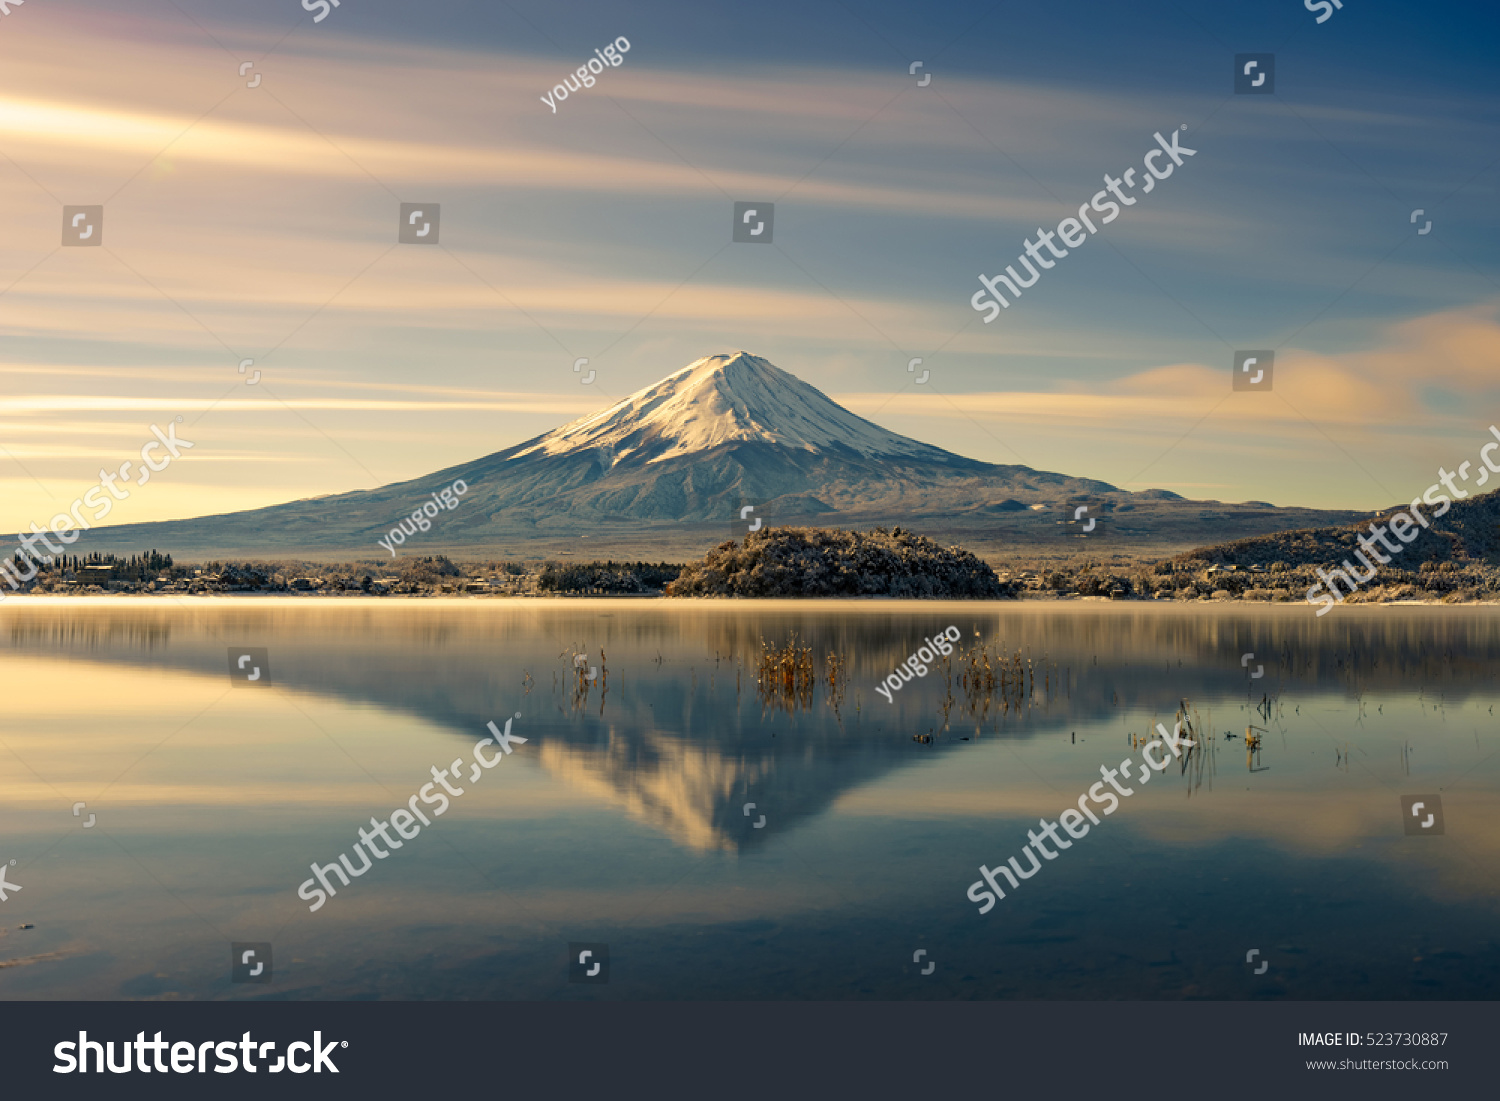 Mt Fuji reflection on water.Fujisan mountain sunrise landscape.Fuji mountain at lake Kawaguchiko and snow landscape.Japan autumn season #523730887